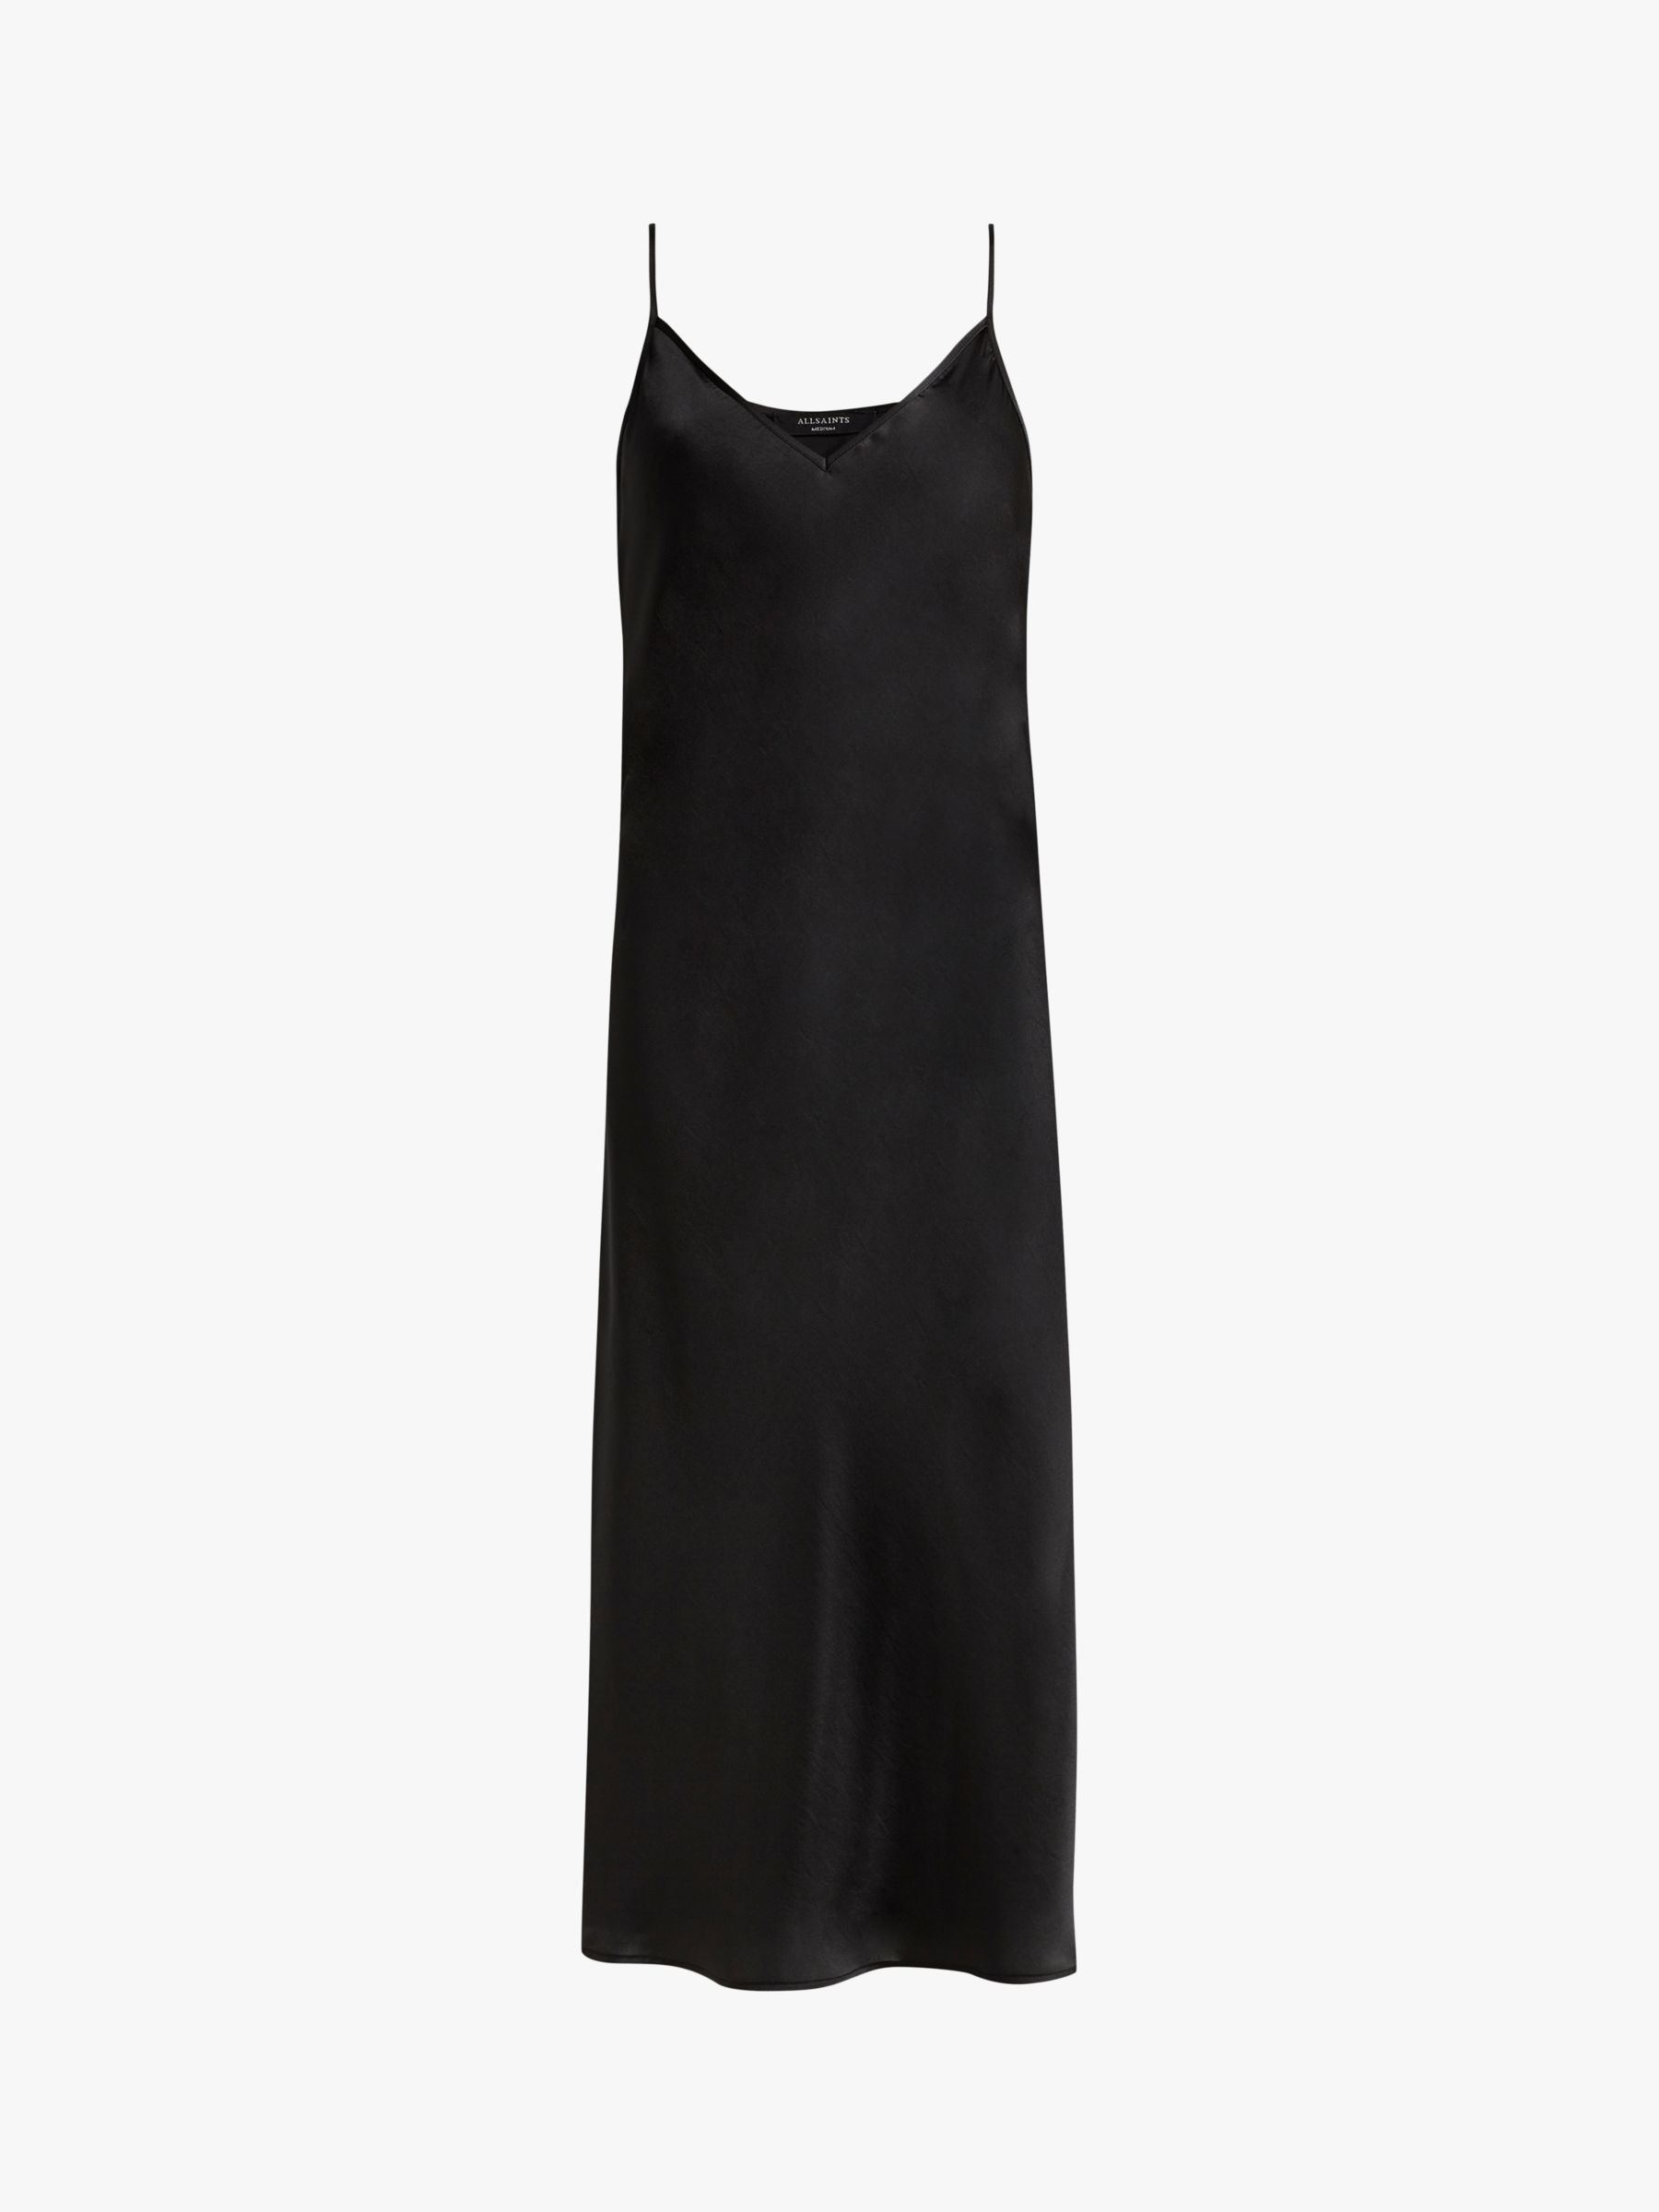 AllSaints Tierney Slip Midi Dress, Black, S